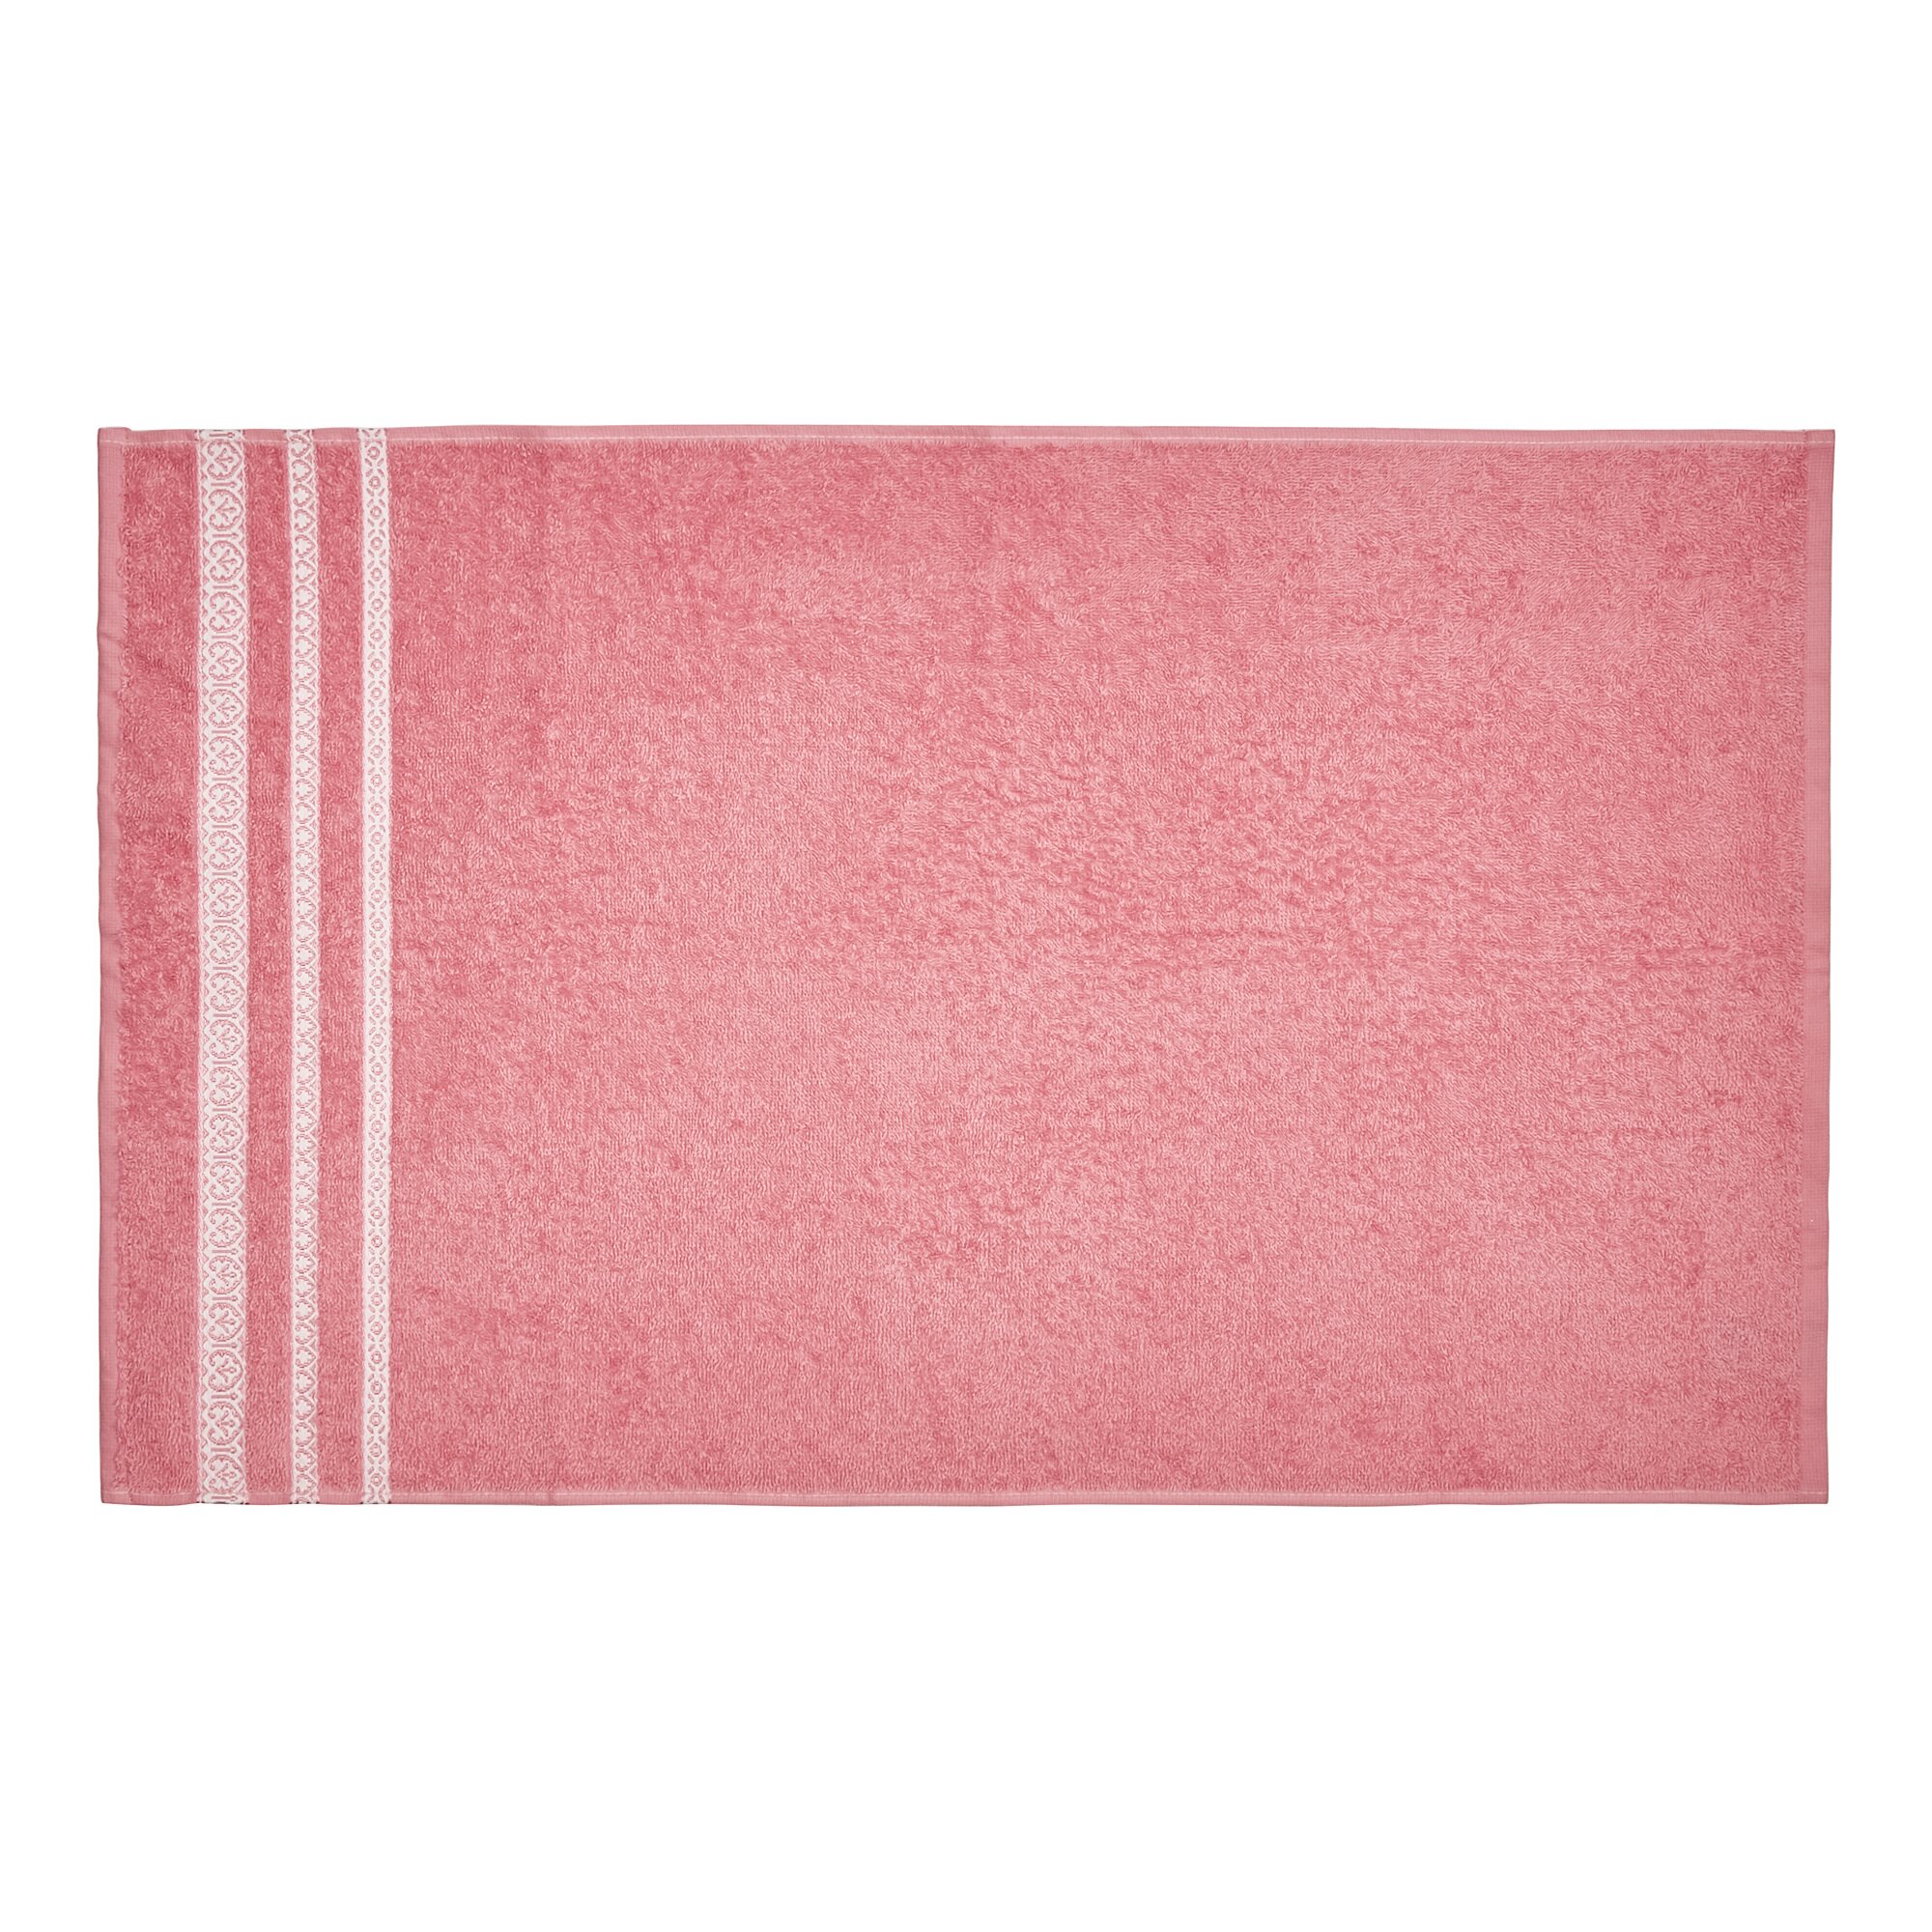 Image of Handtuch mit Namen, rosa